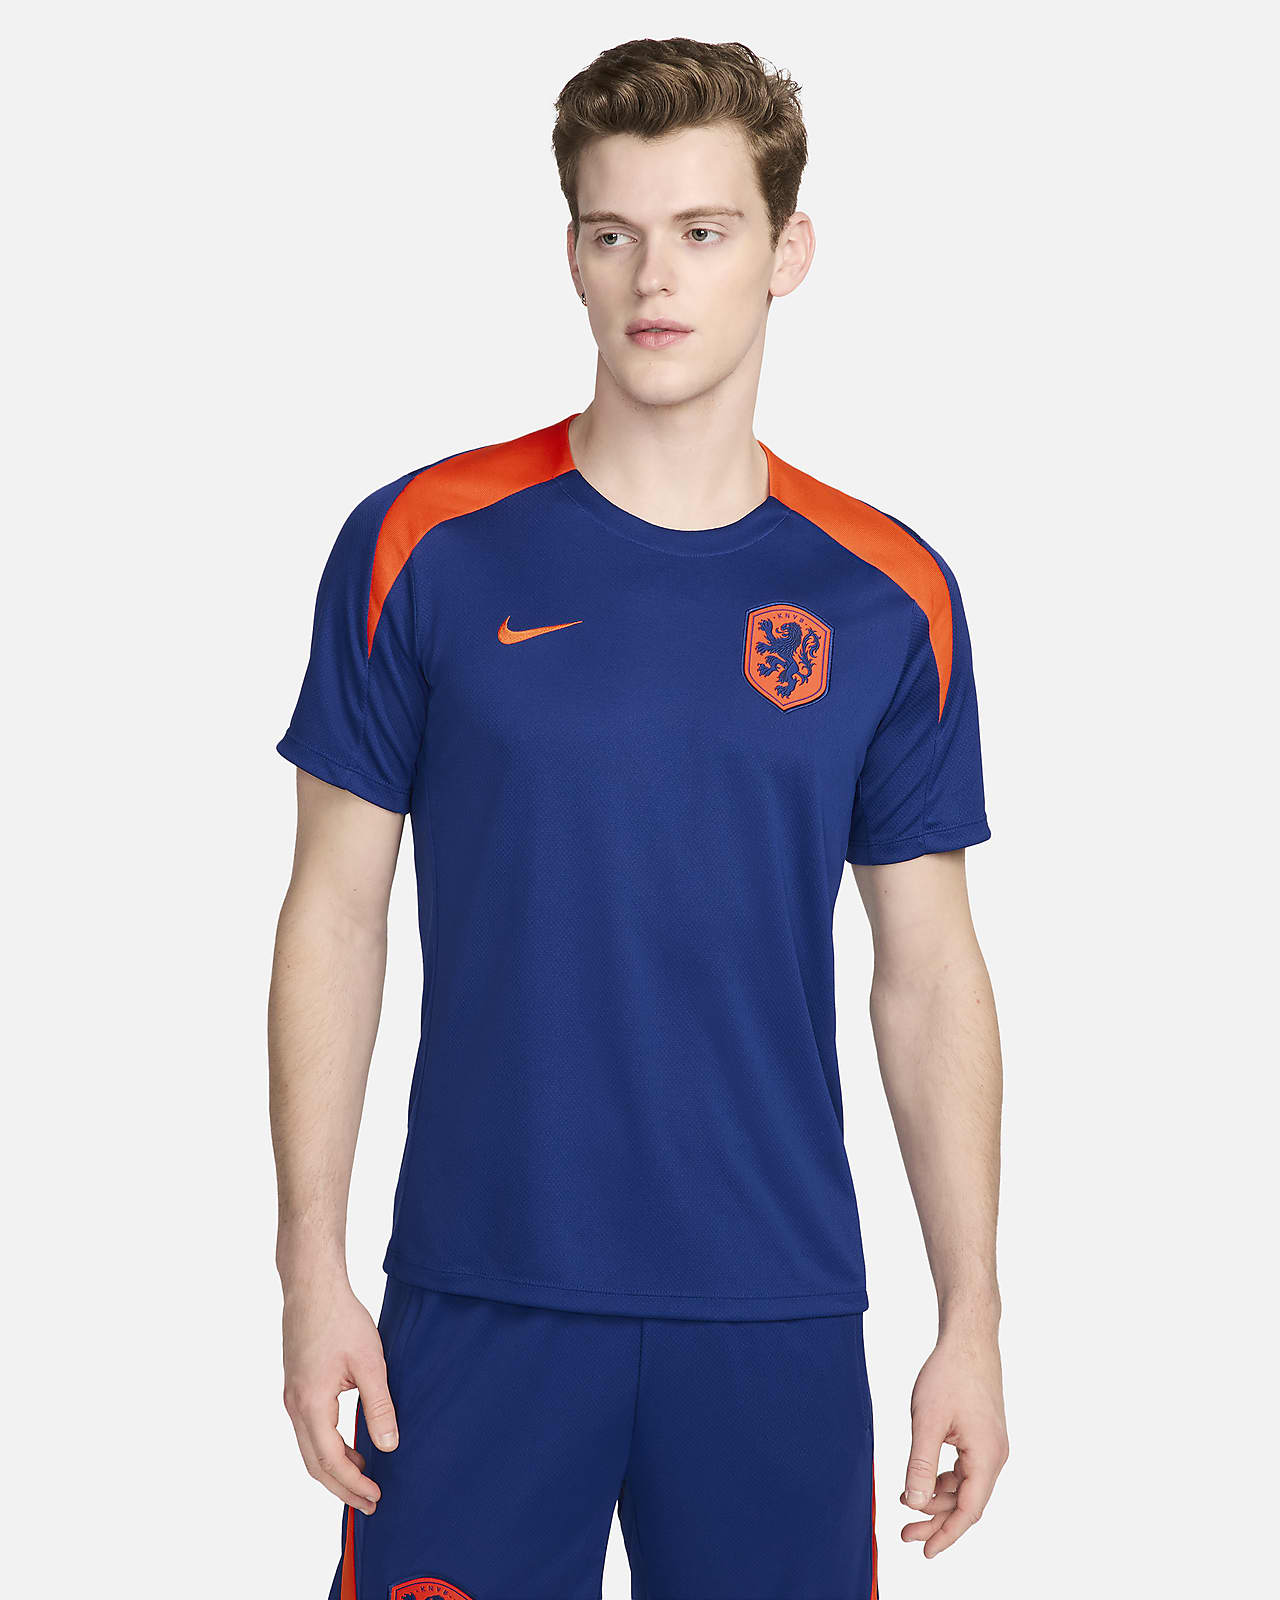 Nederland Strike Nike Dri-FIT knit voetbaltop met korte mouwen voor heren